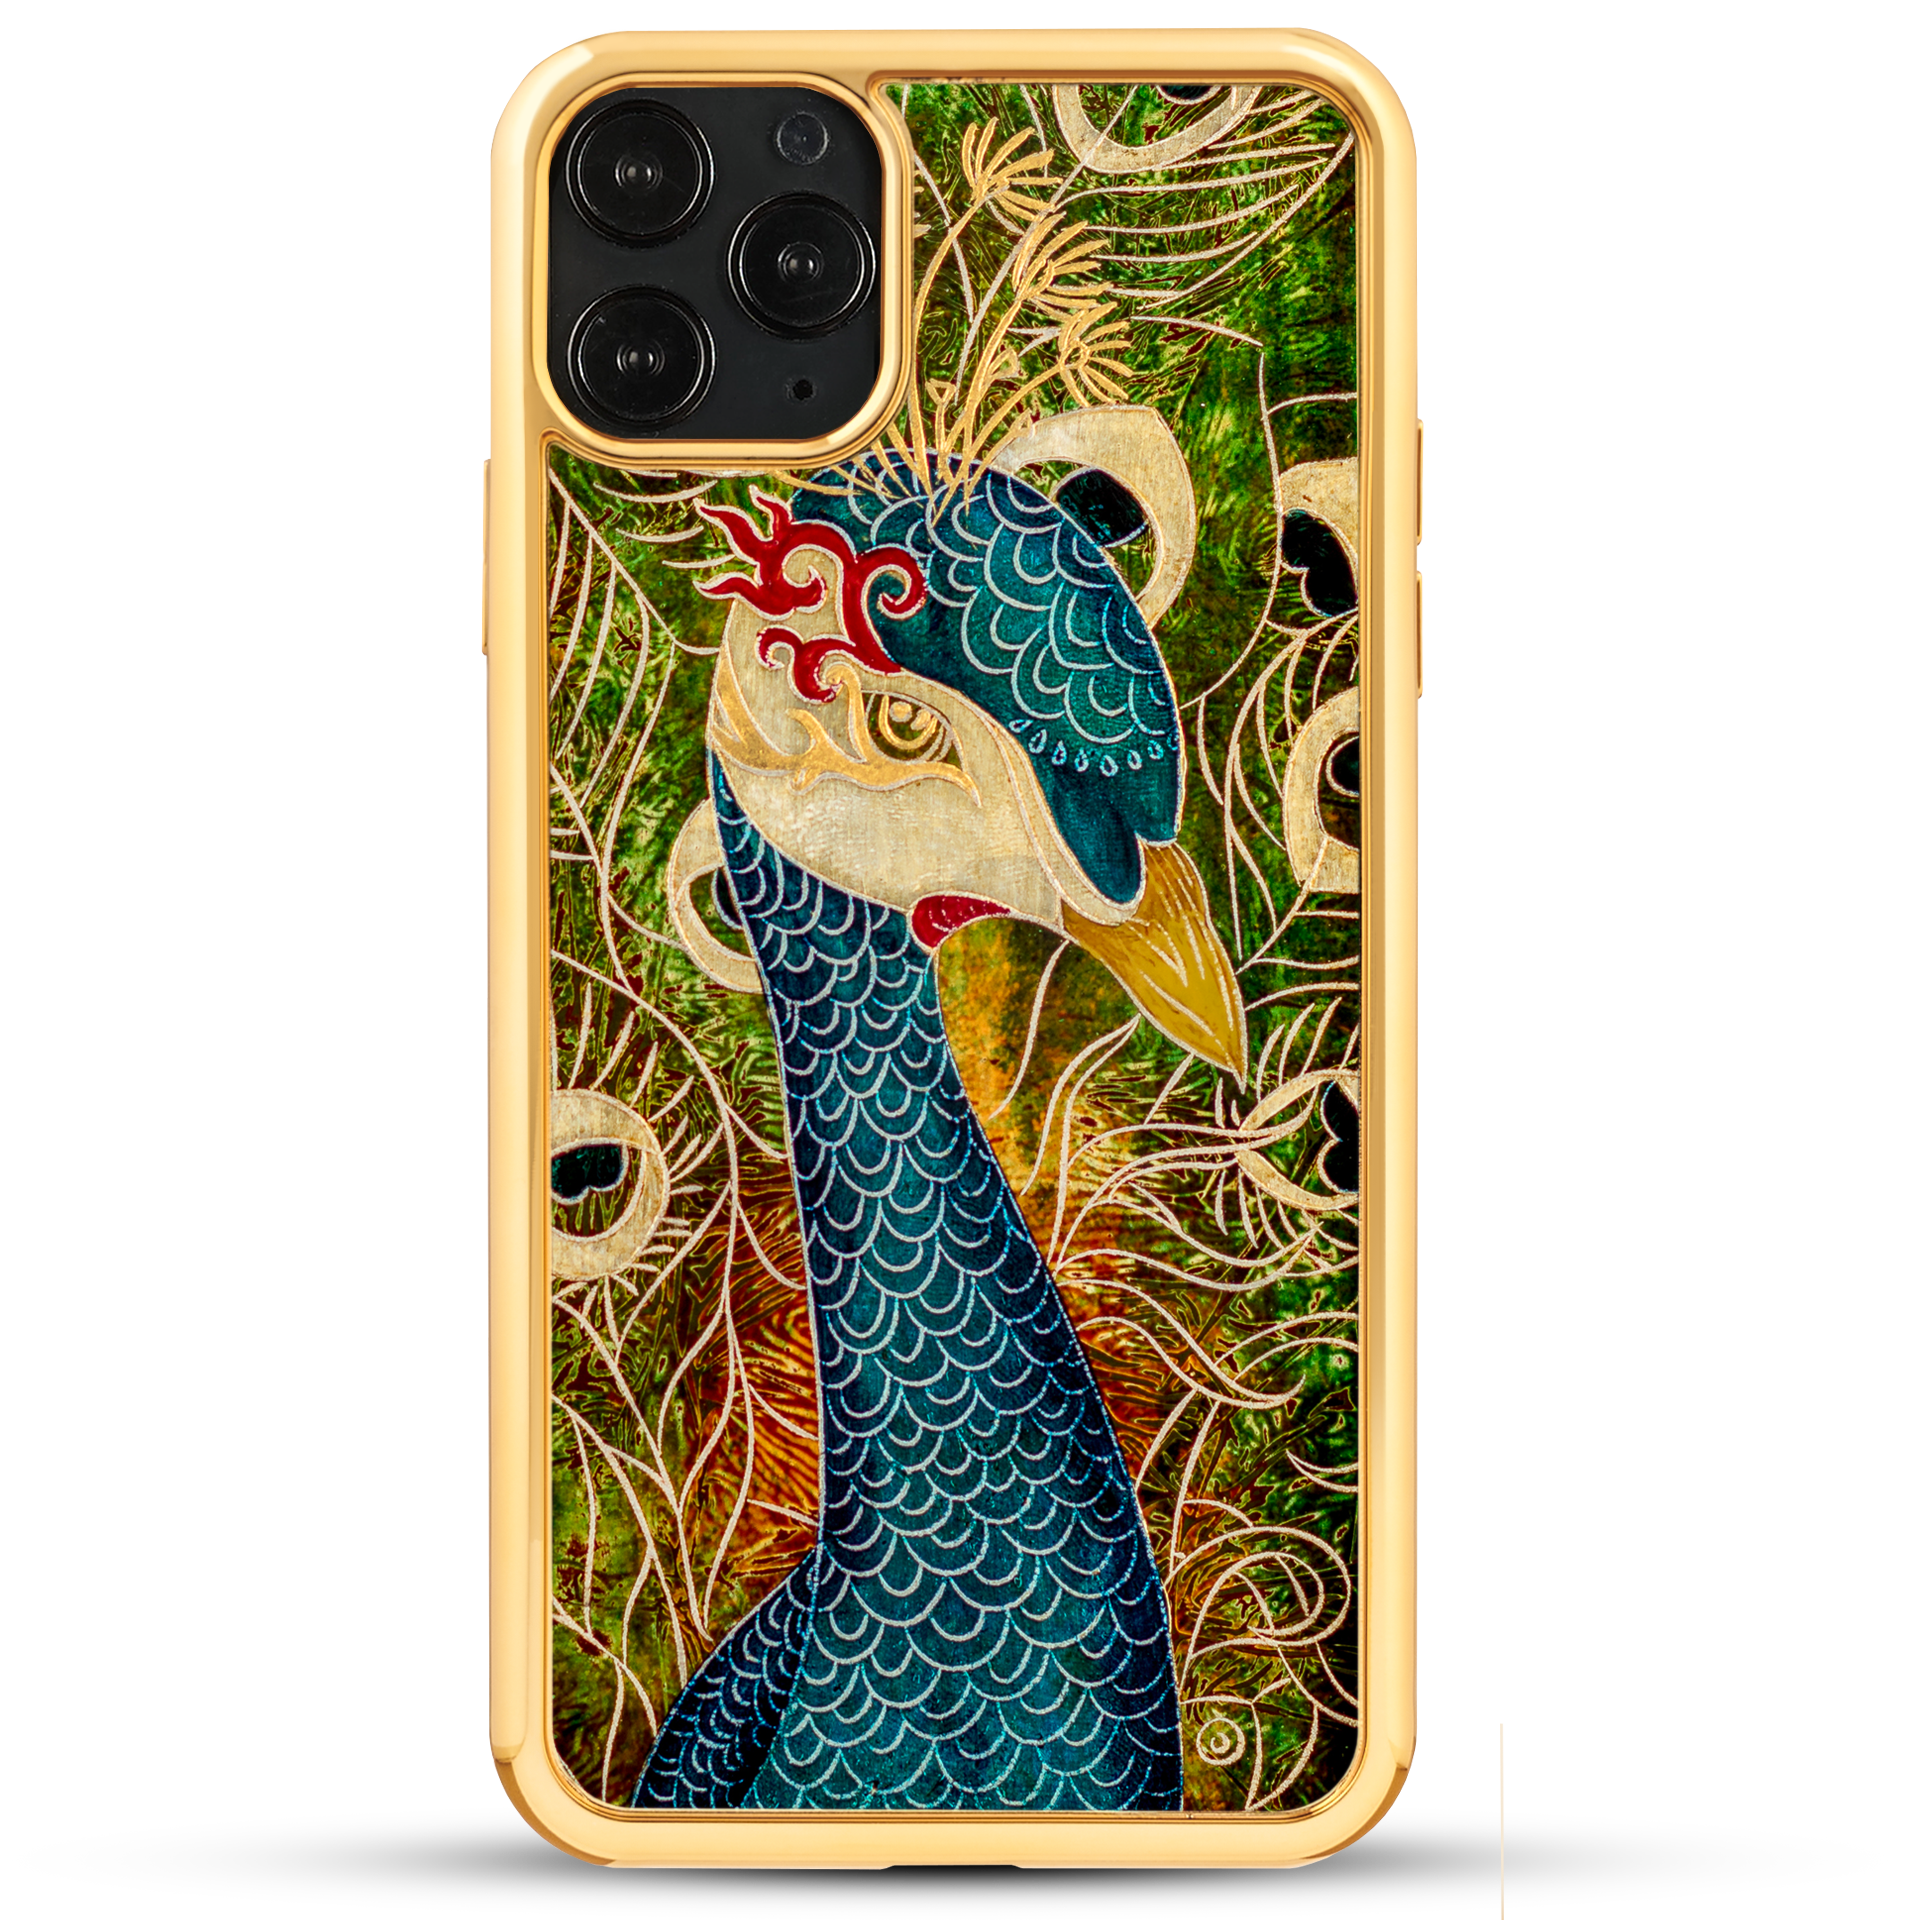 Peacock Goddess - iPhone 11 Series & Earlier